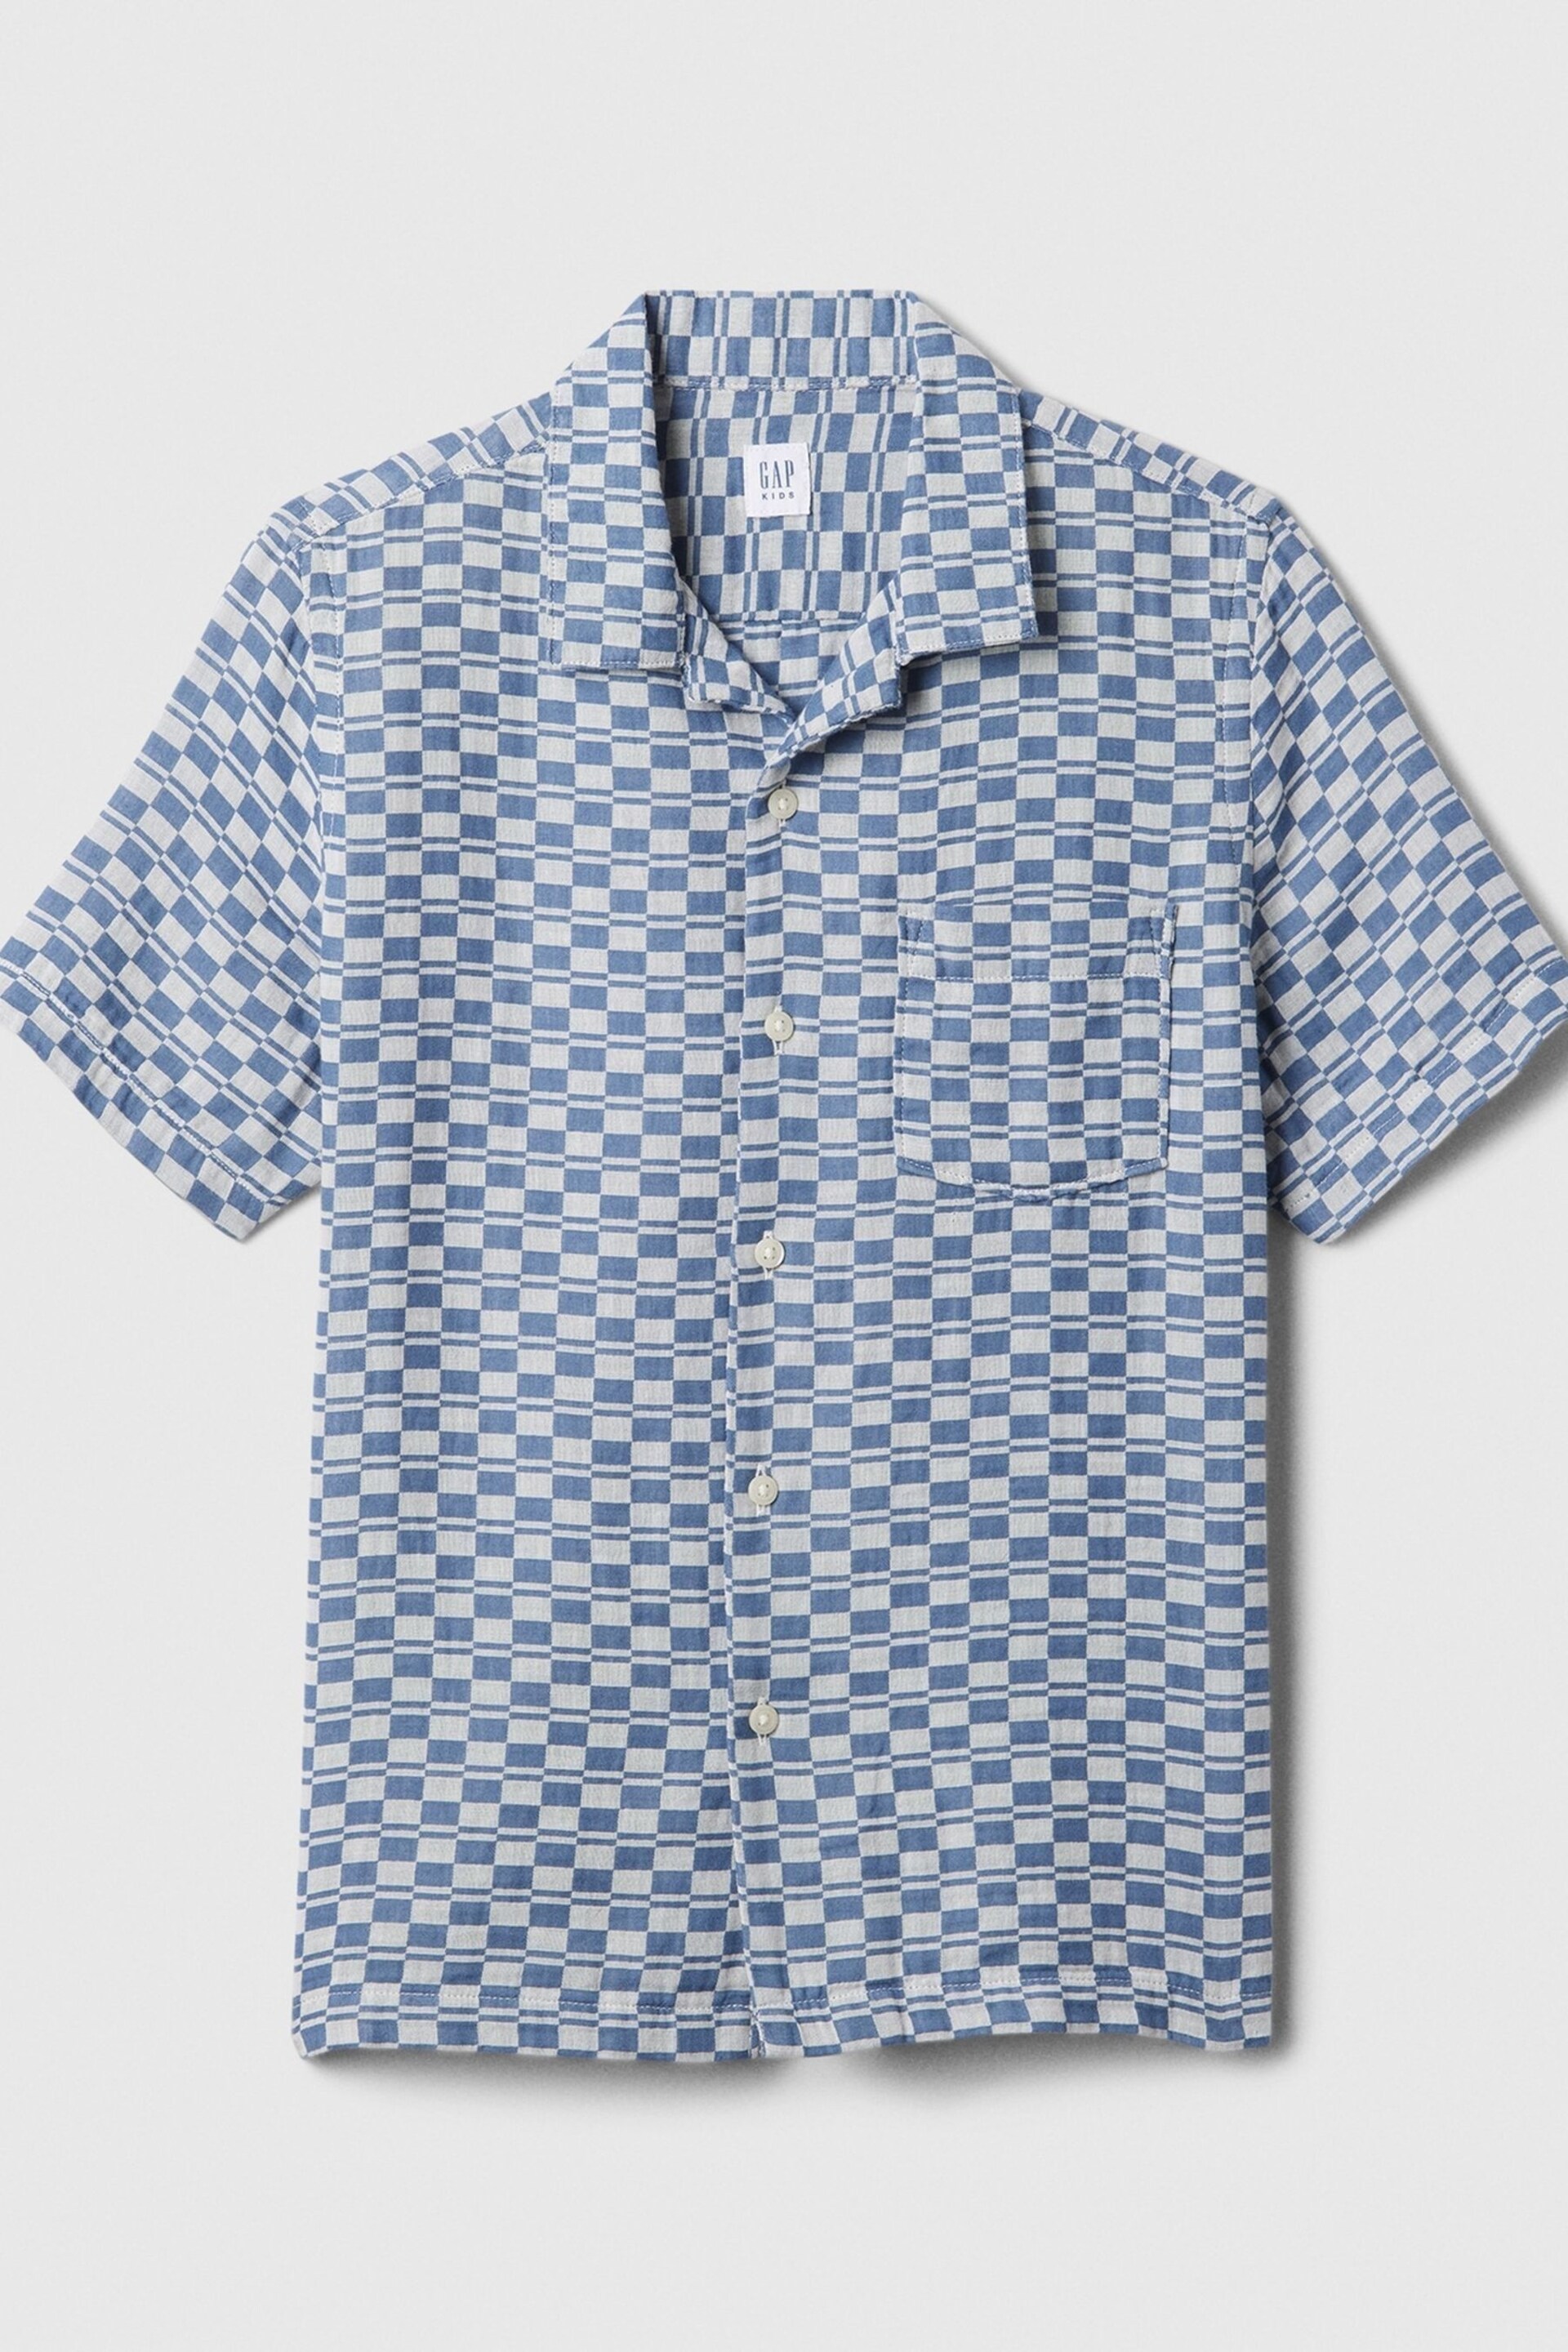 Gap Blue Crinkle Cotton Short Sleeve Shirt (4-13yrs) - Image 1 of 3